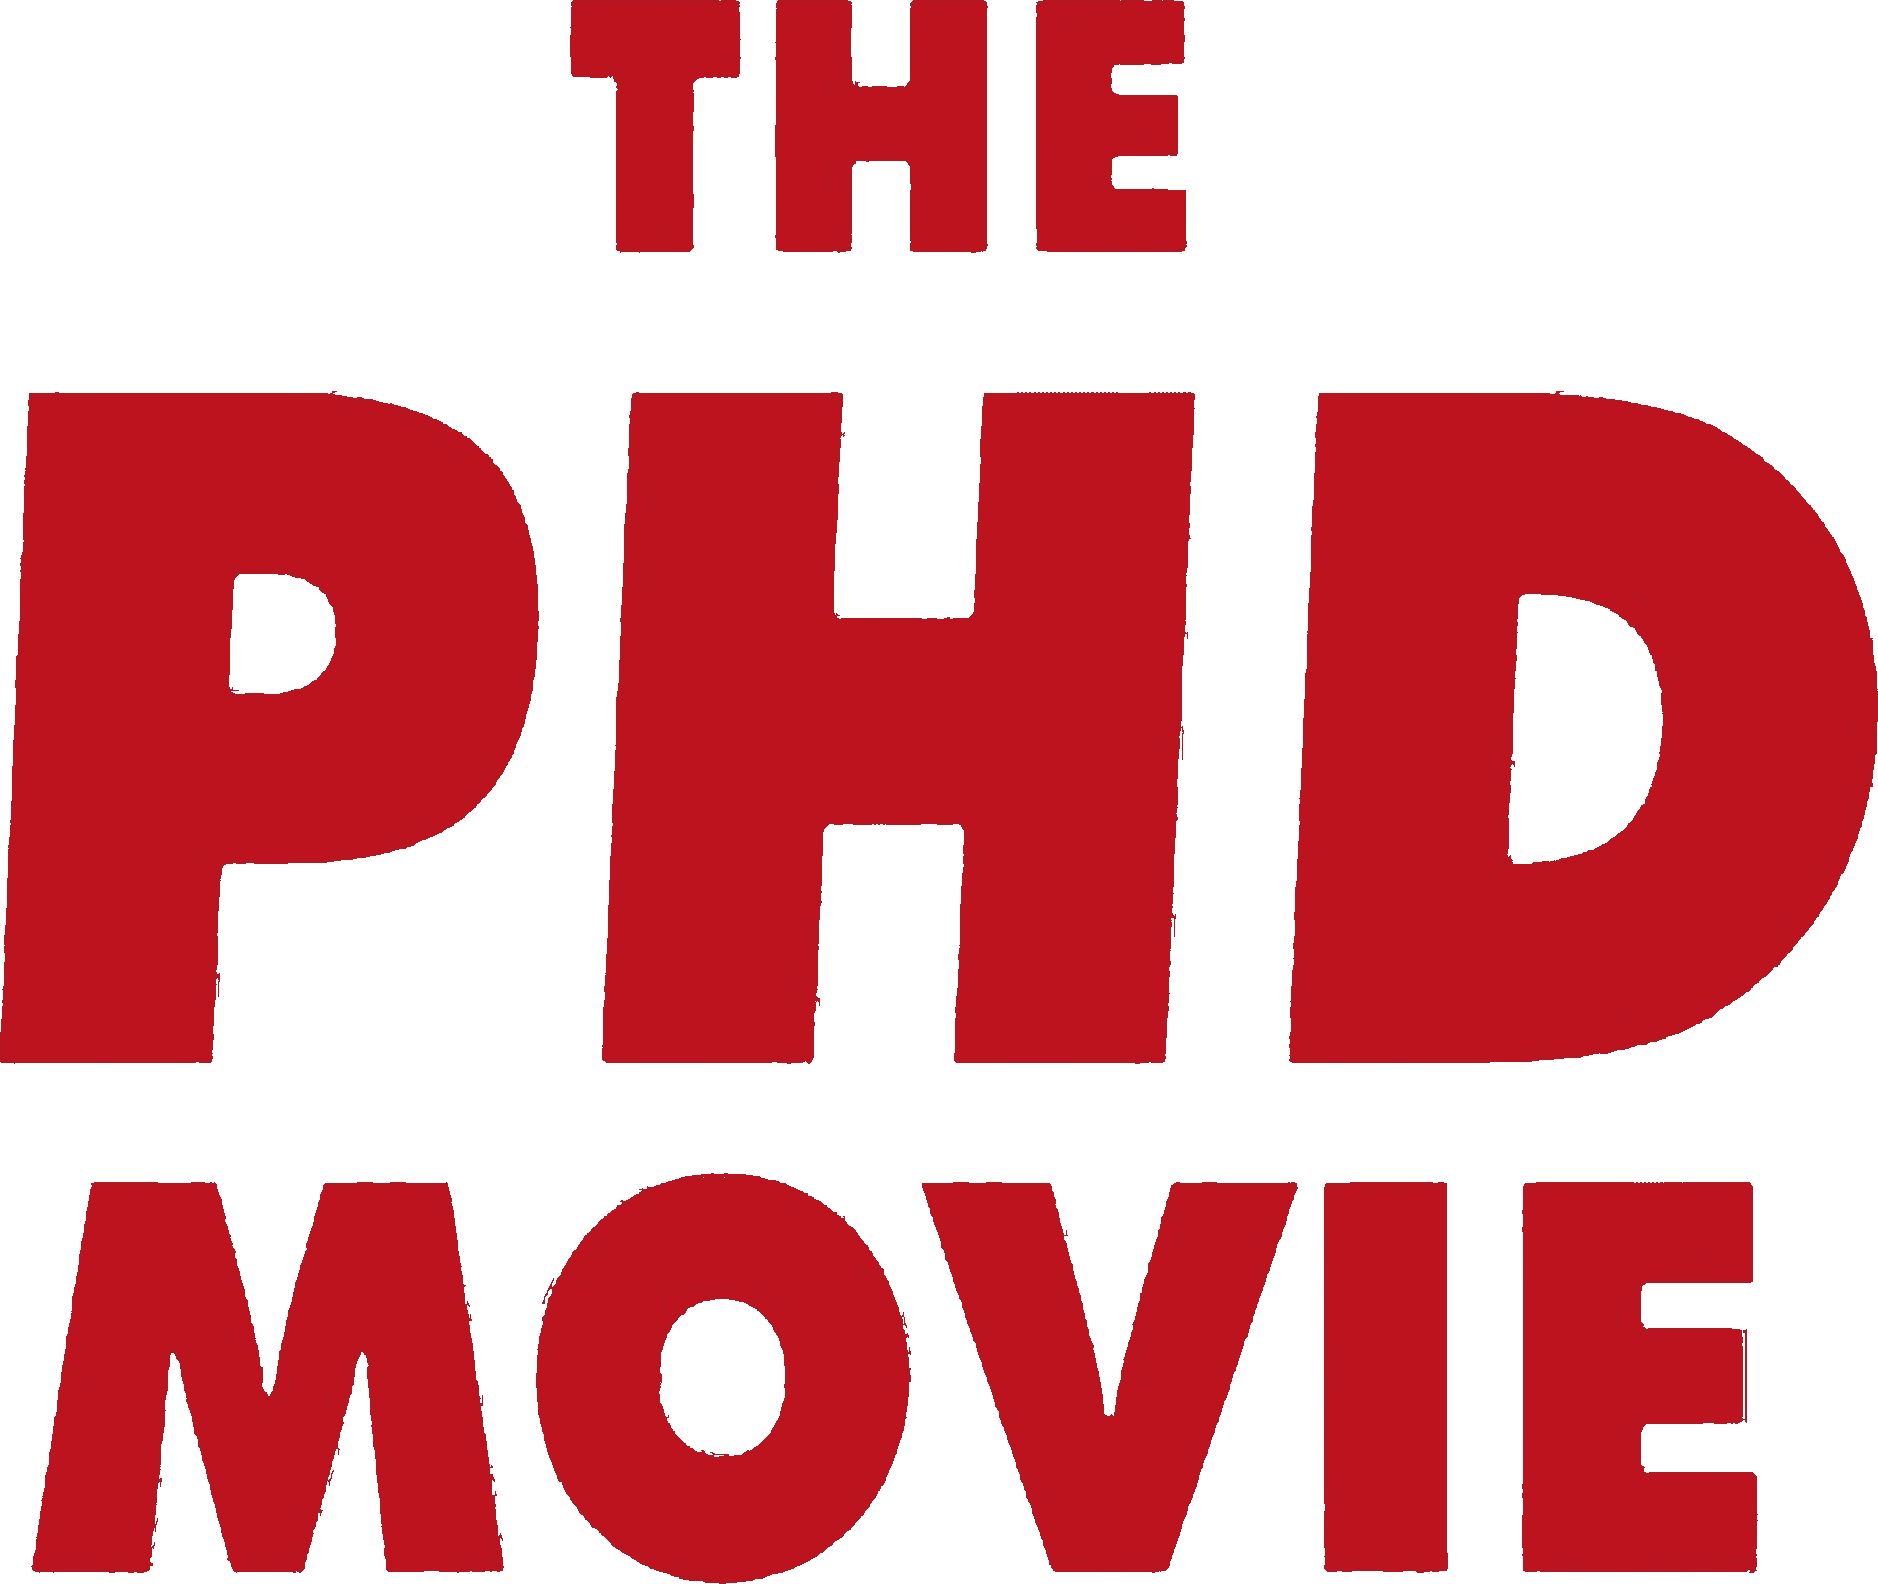 The PHD movie logo